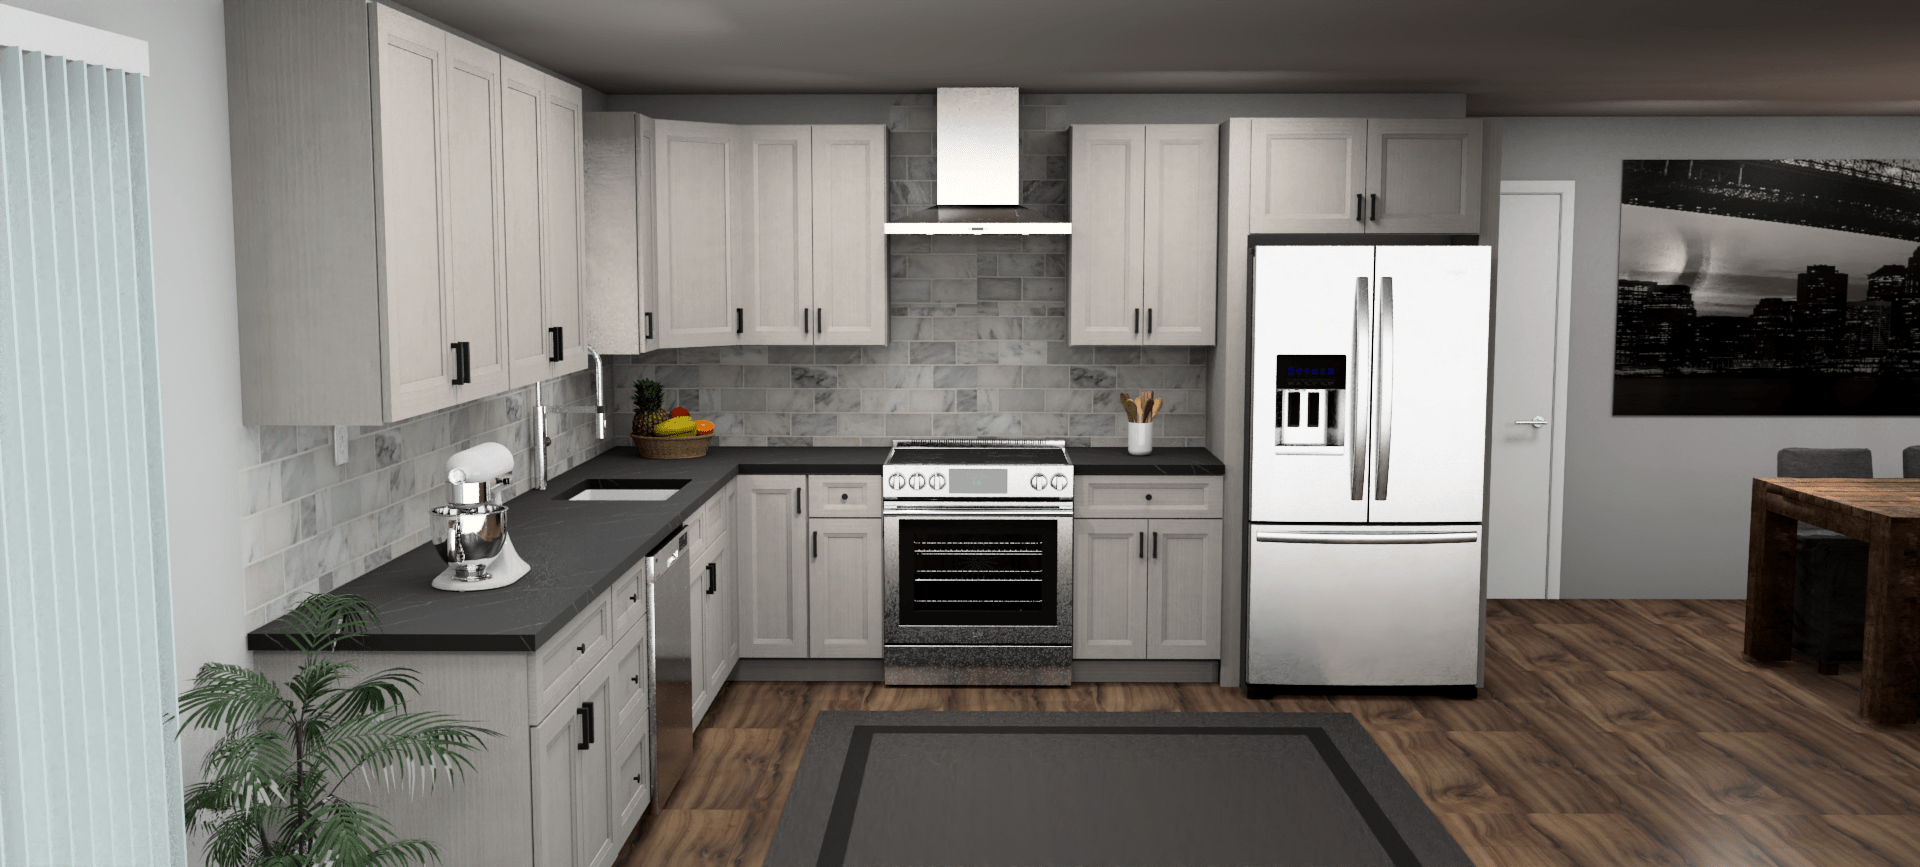 Fabuwood Allure Onyx Horizon 12 x 12 L Shaped Kitchen Front Layout Photo